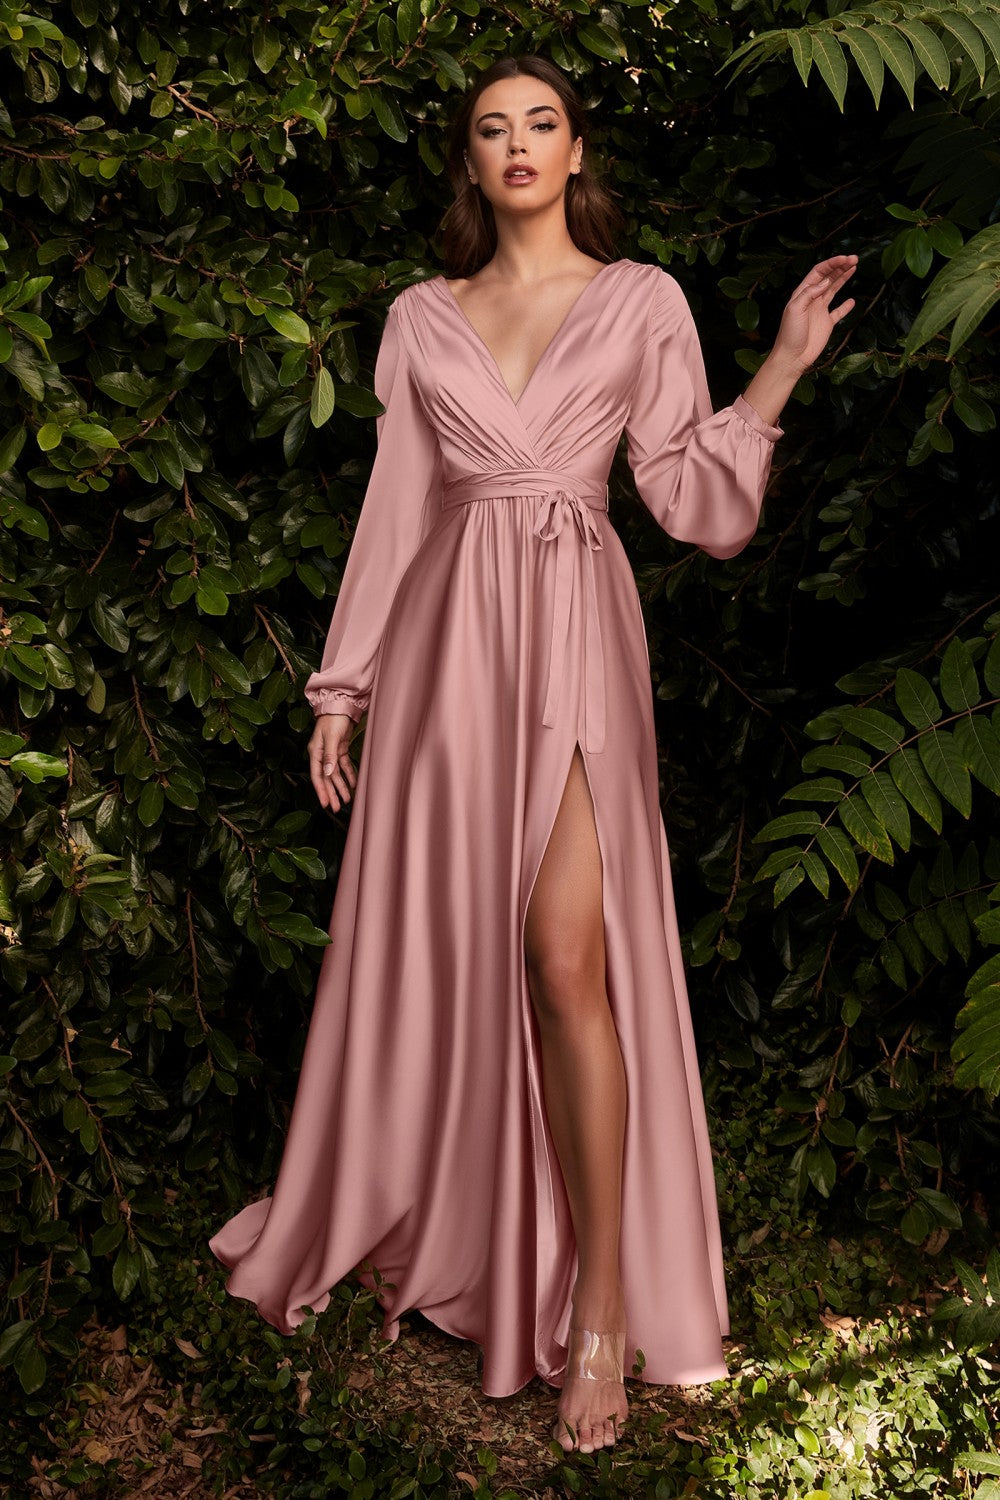 Doreen Long Sleeve Bridesmaid Dress in Sienna Doreen 7407475KK-RoseGold